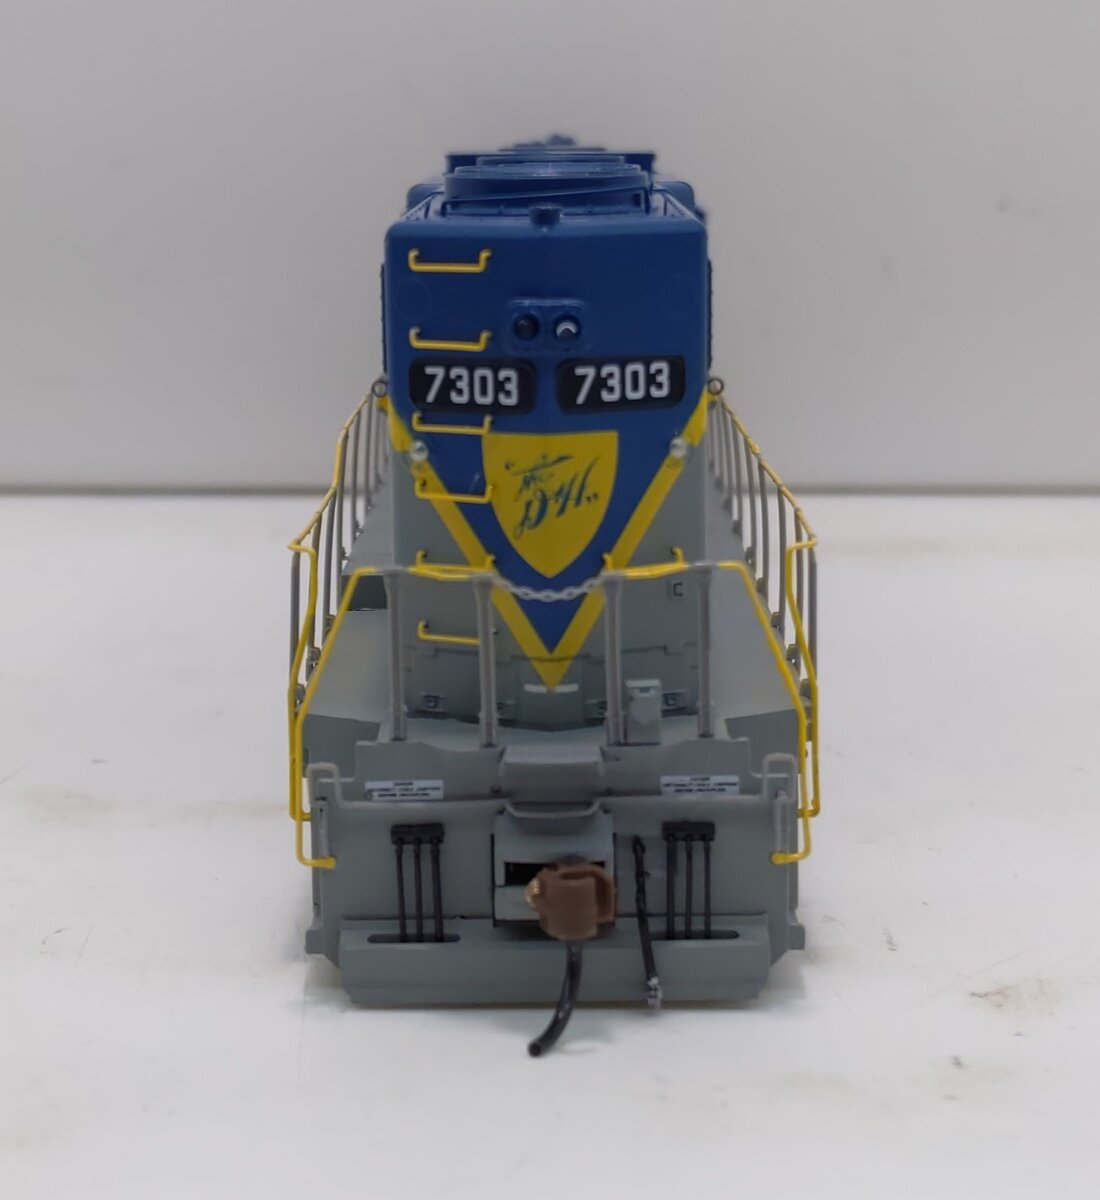 Athearn G65309 HO Delaware & Hudson GP38-2 Phase 1a Diesel Locomotive #7303